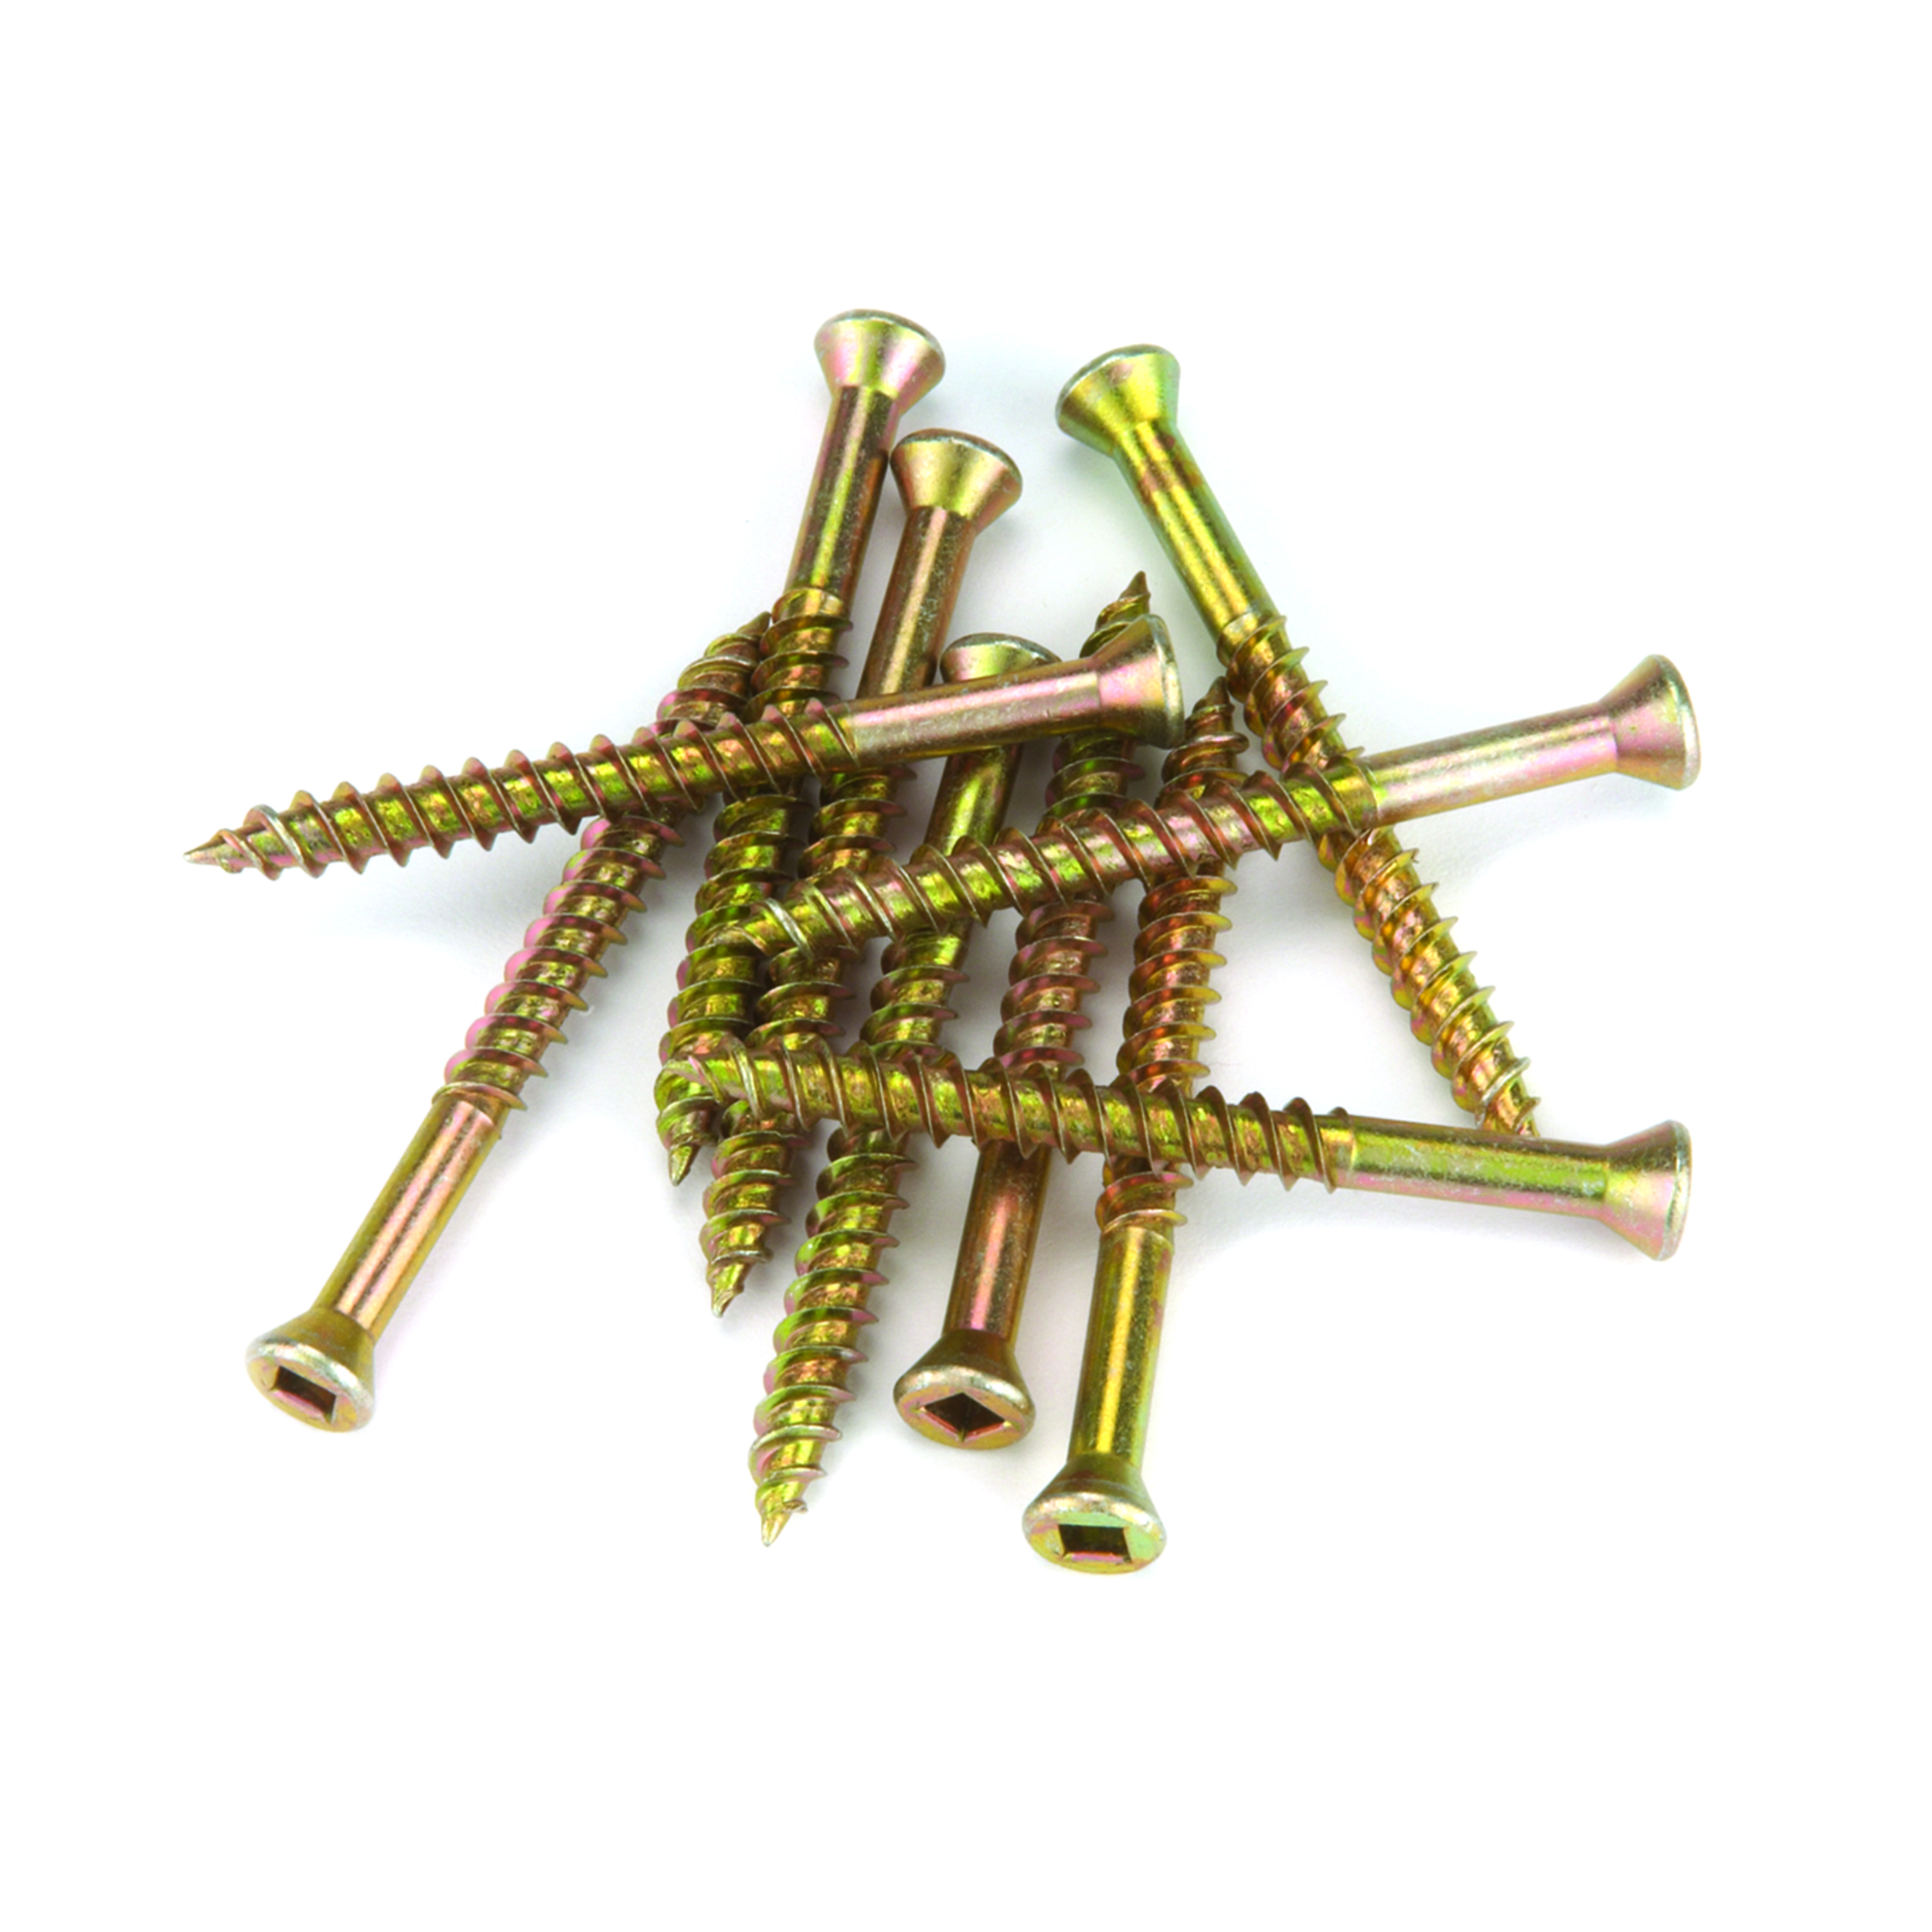 7 X 1 Square Drive Woodworking Screws, Trim Head, Yellow Zinc, 100-piece